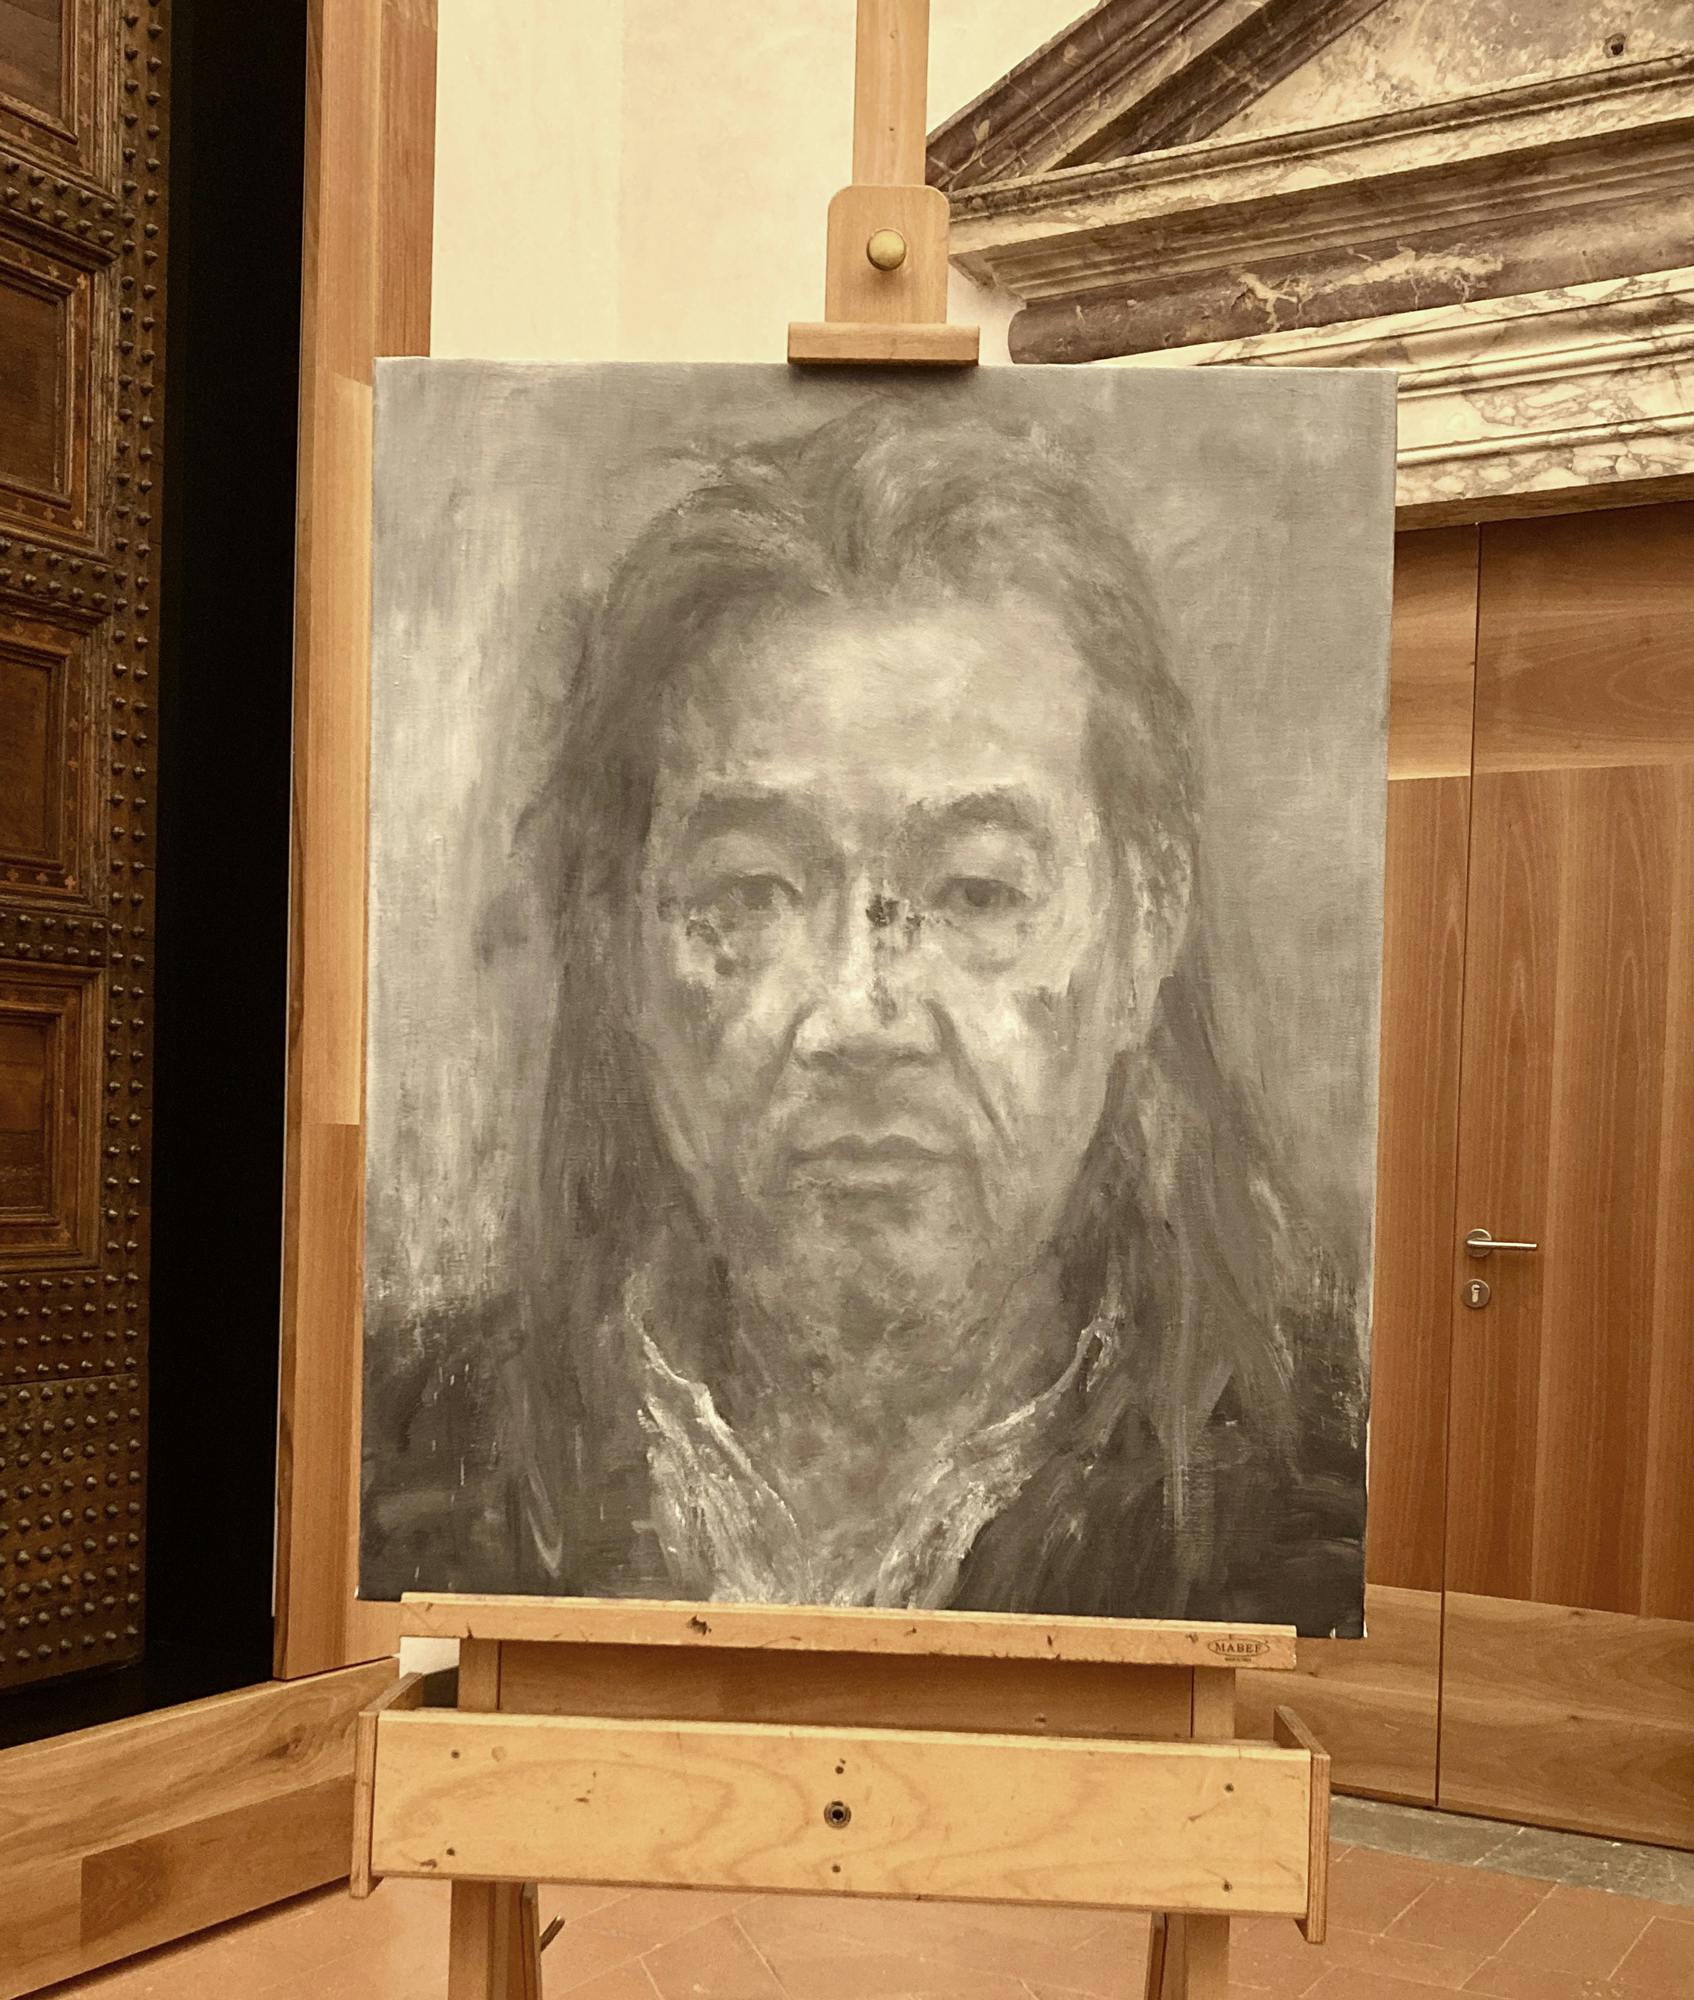 Yan Pei Ming donates his self-portrait to the Uffizi